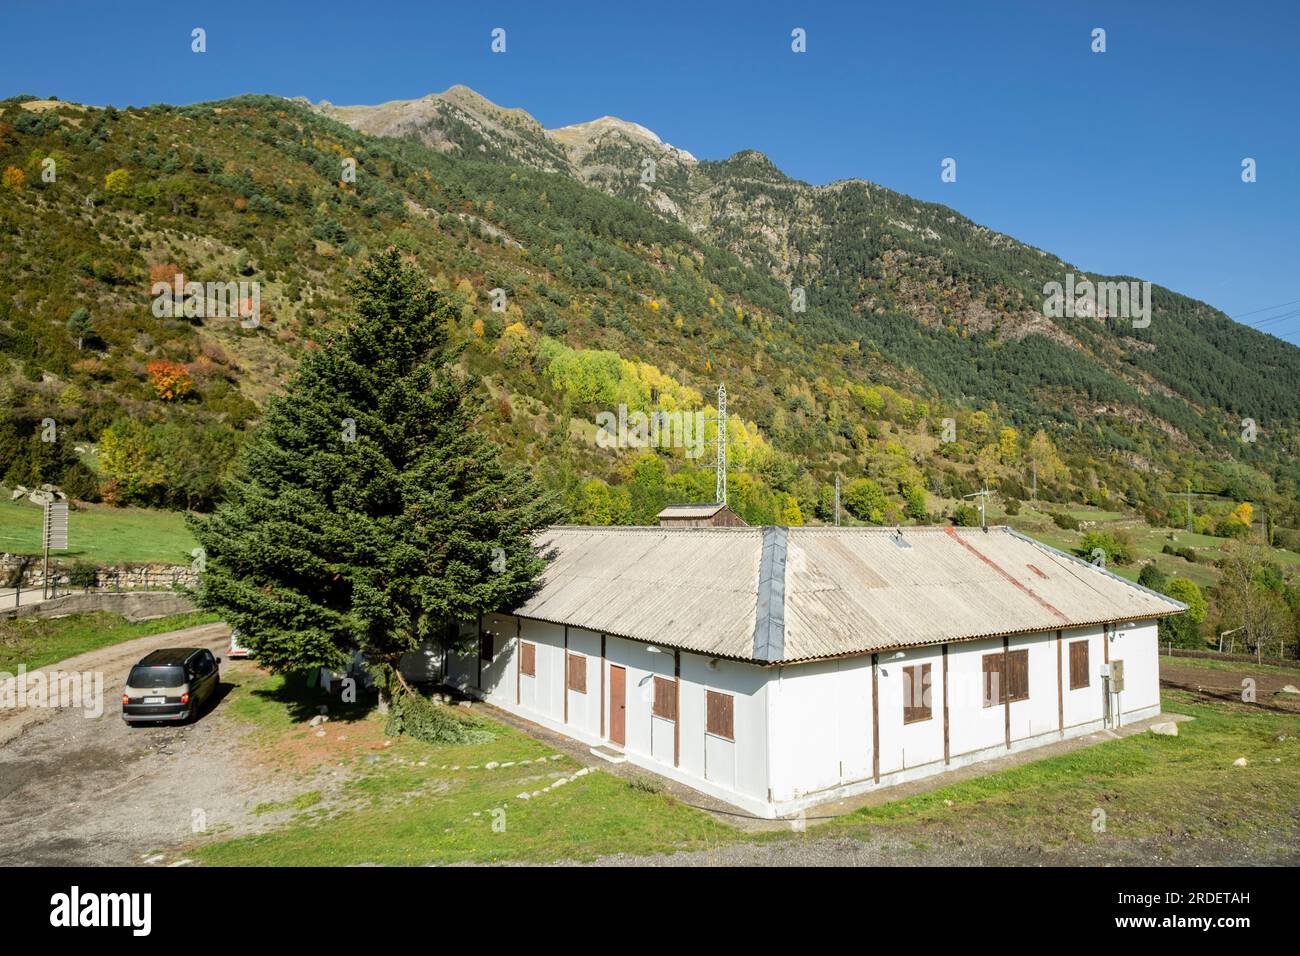 Camp/house of Colonias L'Estel, Aneto, municipality of Montanuy, Ribagorza, province of Huesca, Aragon, Pyrenees mountain range, Spain Stock Photo